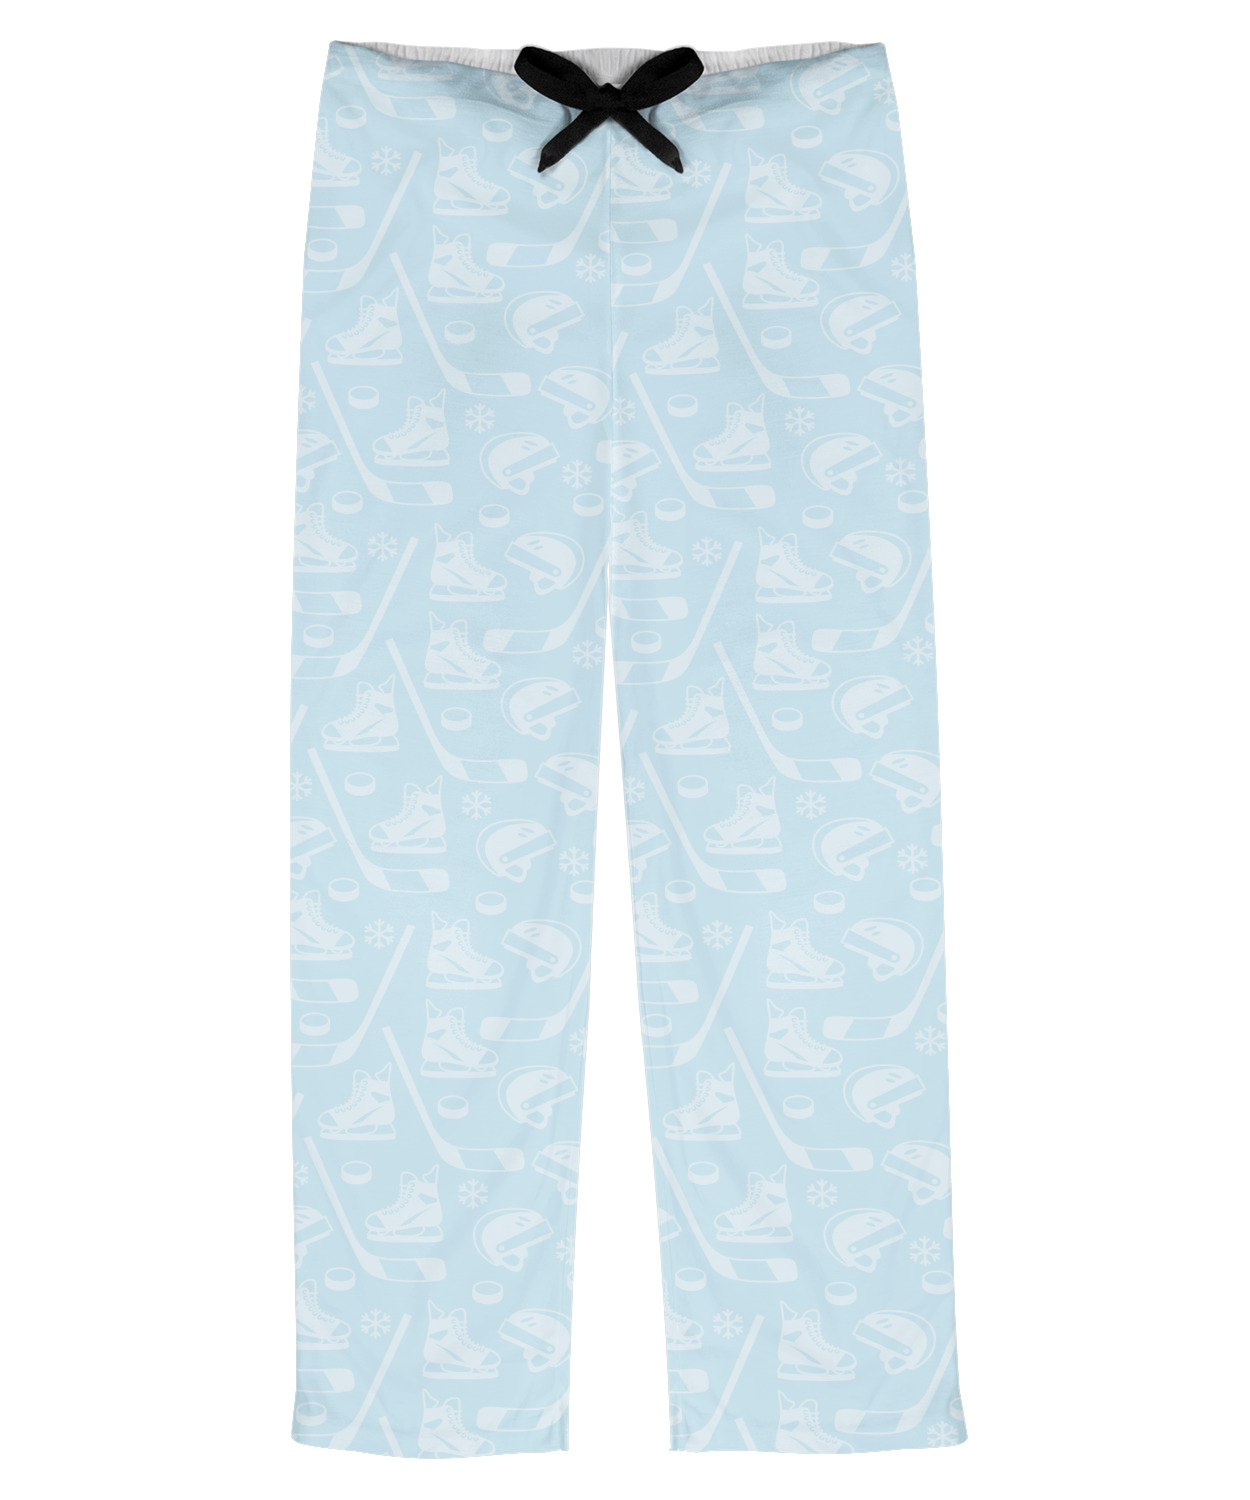 Hockey Mens Pajama Pants - L (Personalized) - YouCustomizeIt